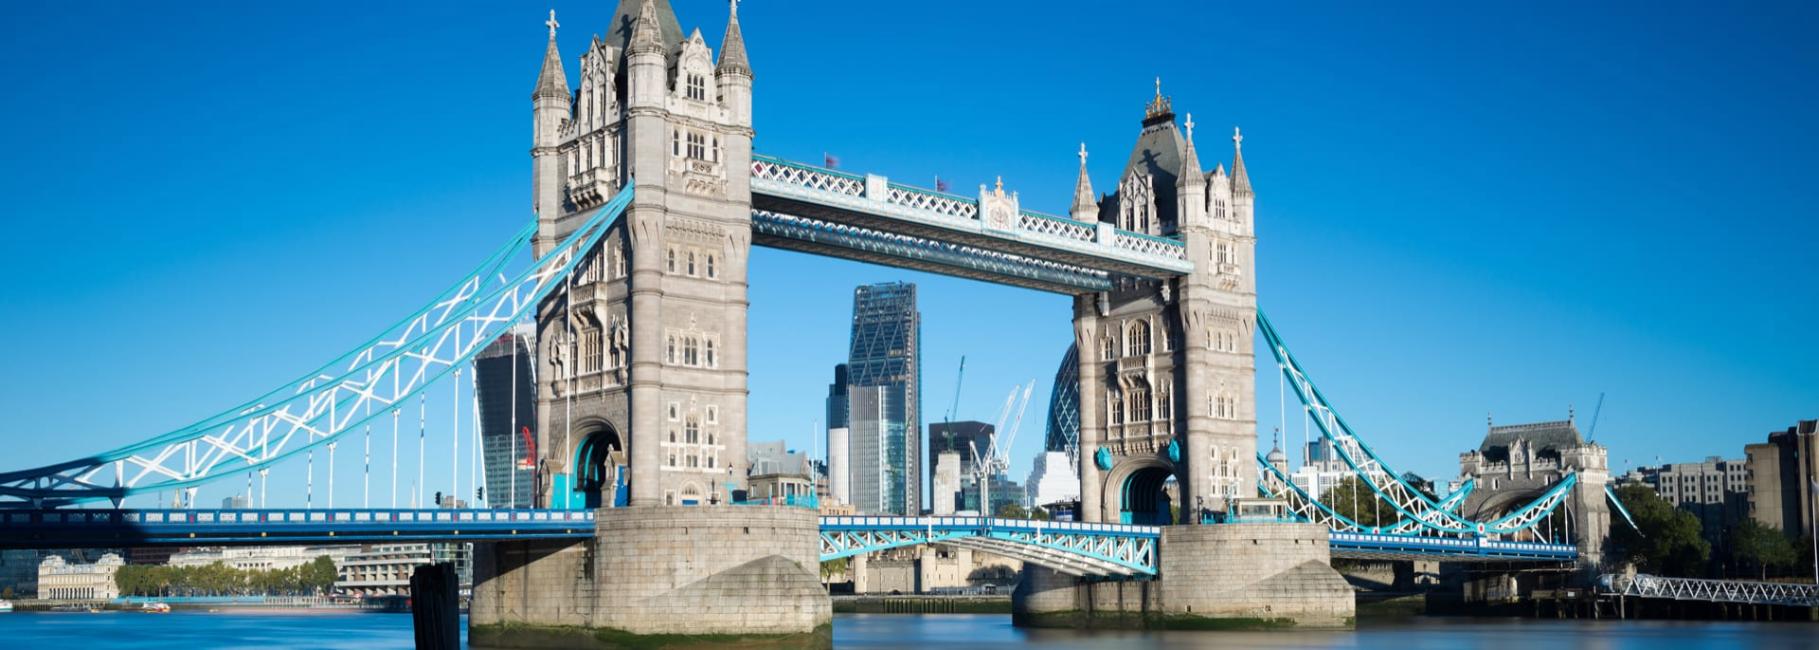 london architecture trip header slk fe